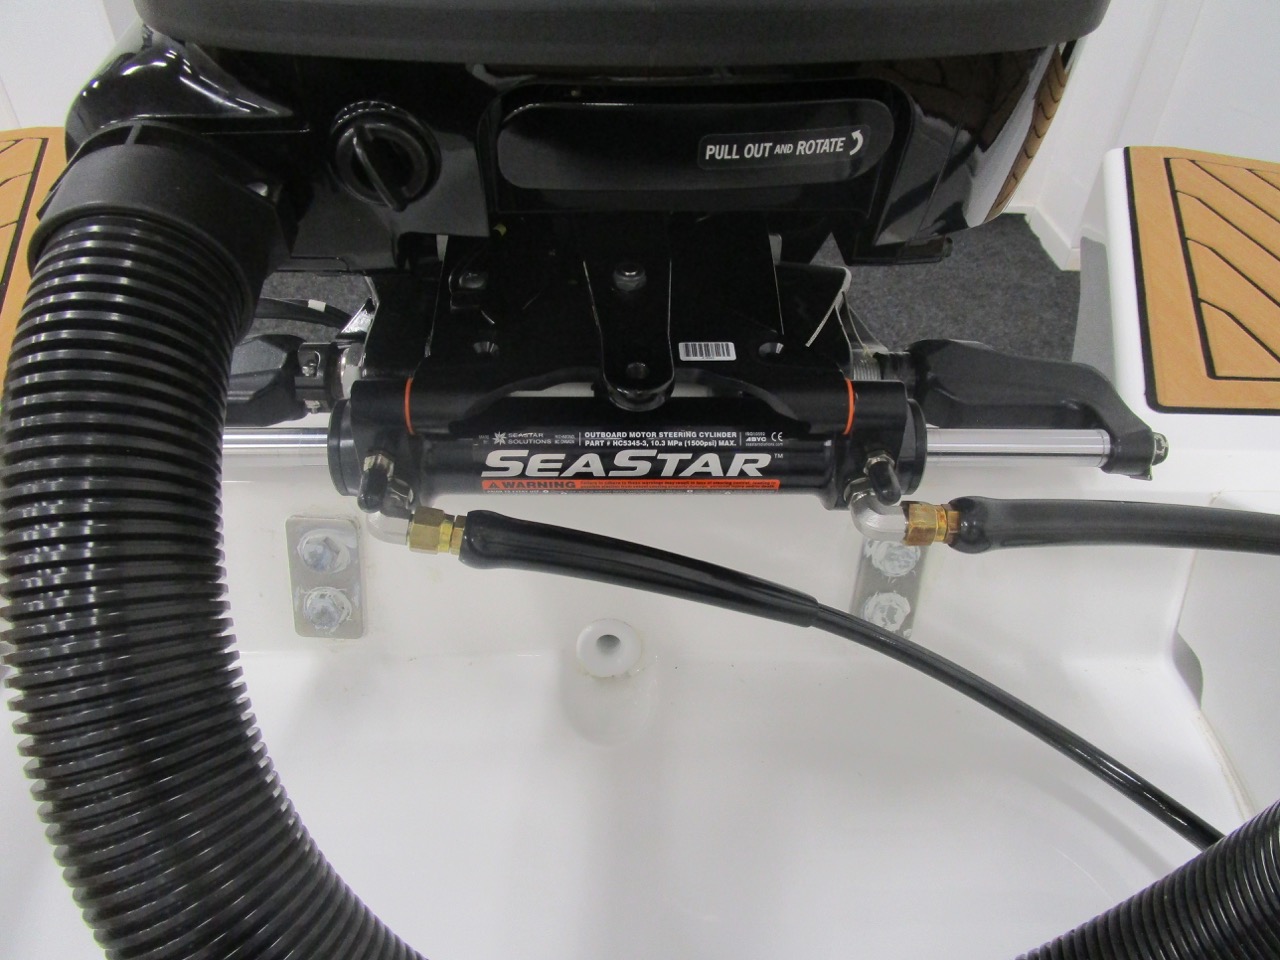 GRAND G850 RIB Sea star hydraulic steering with power assist pump